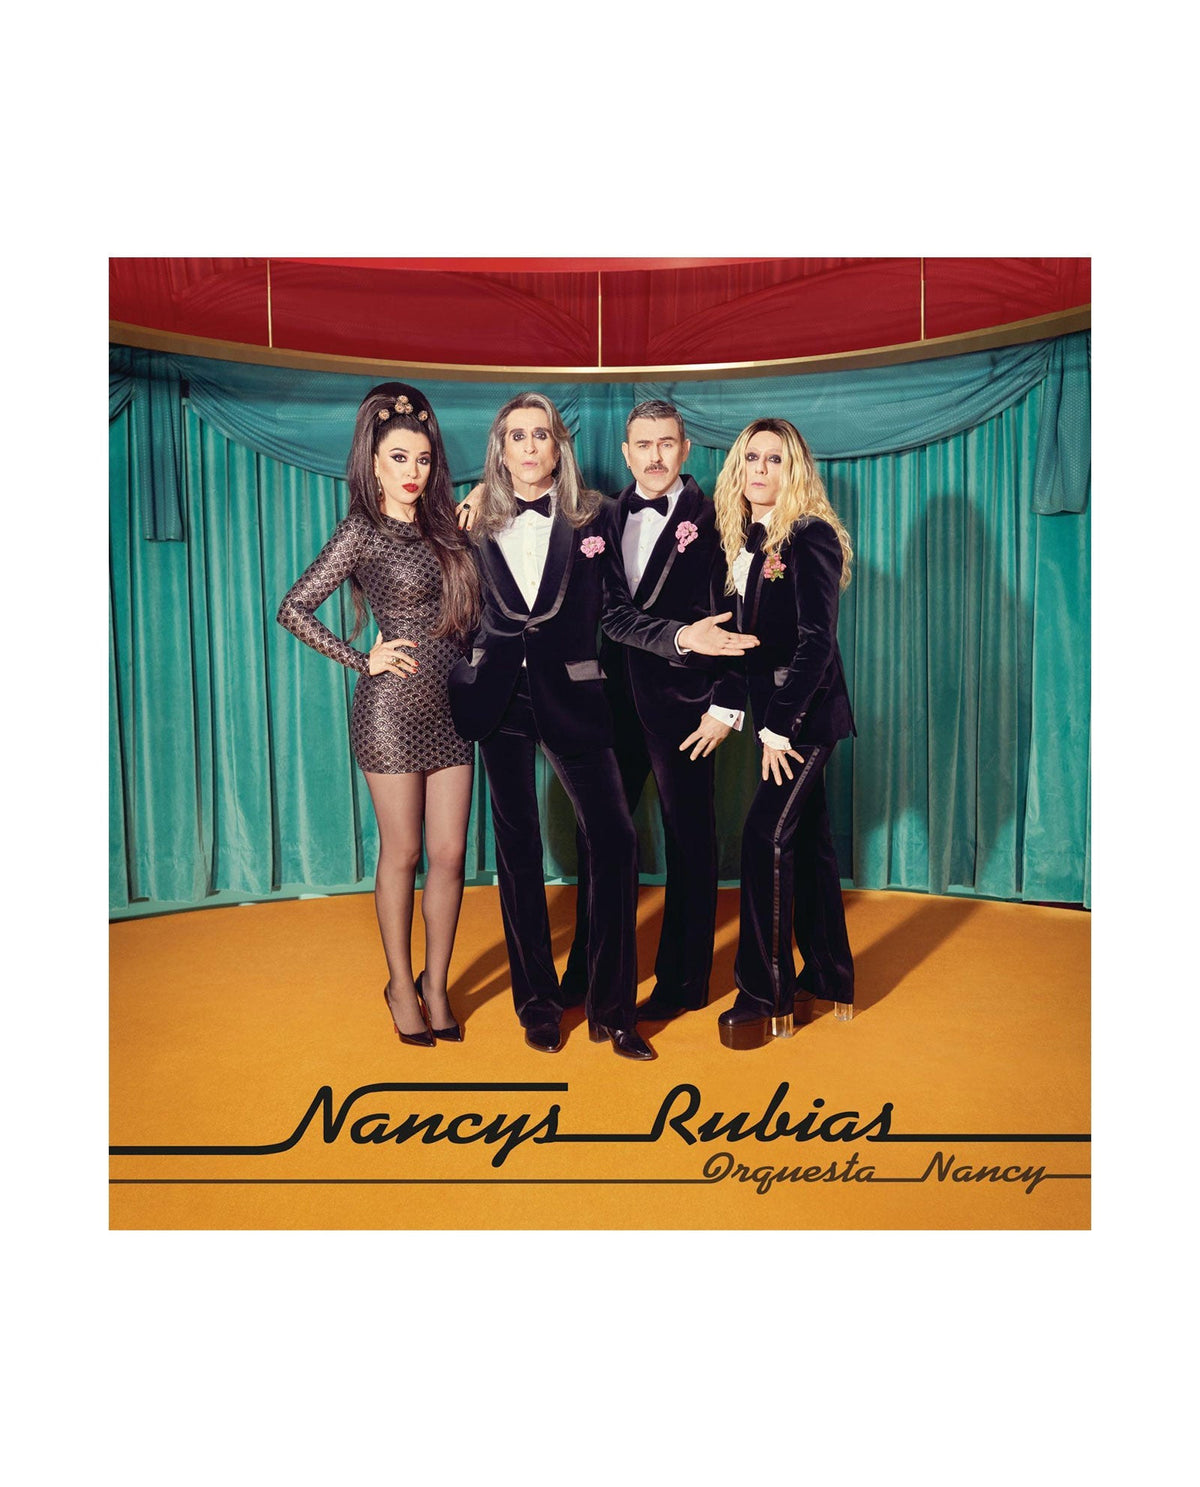 Nancys Rubias - LP Vinilo + Postal Firmada "Orquesta Nancy" - D2fy · Rocktud - Rocktud